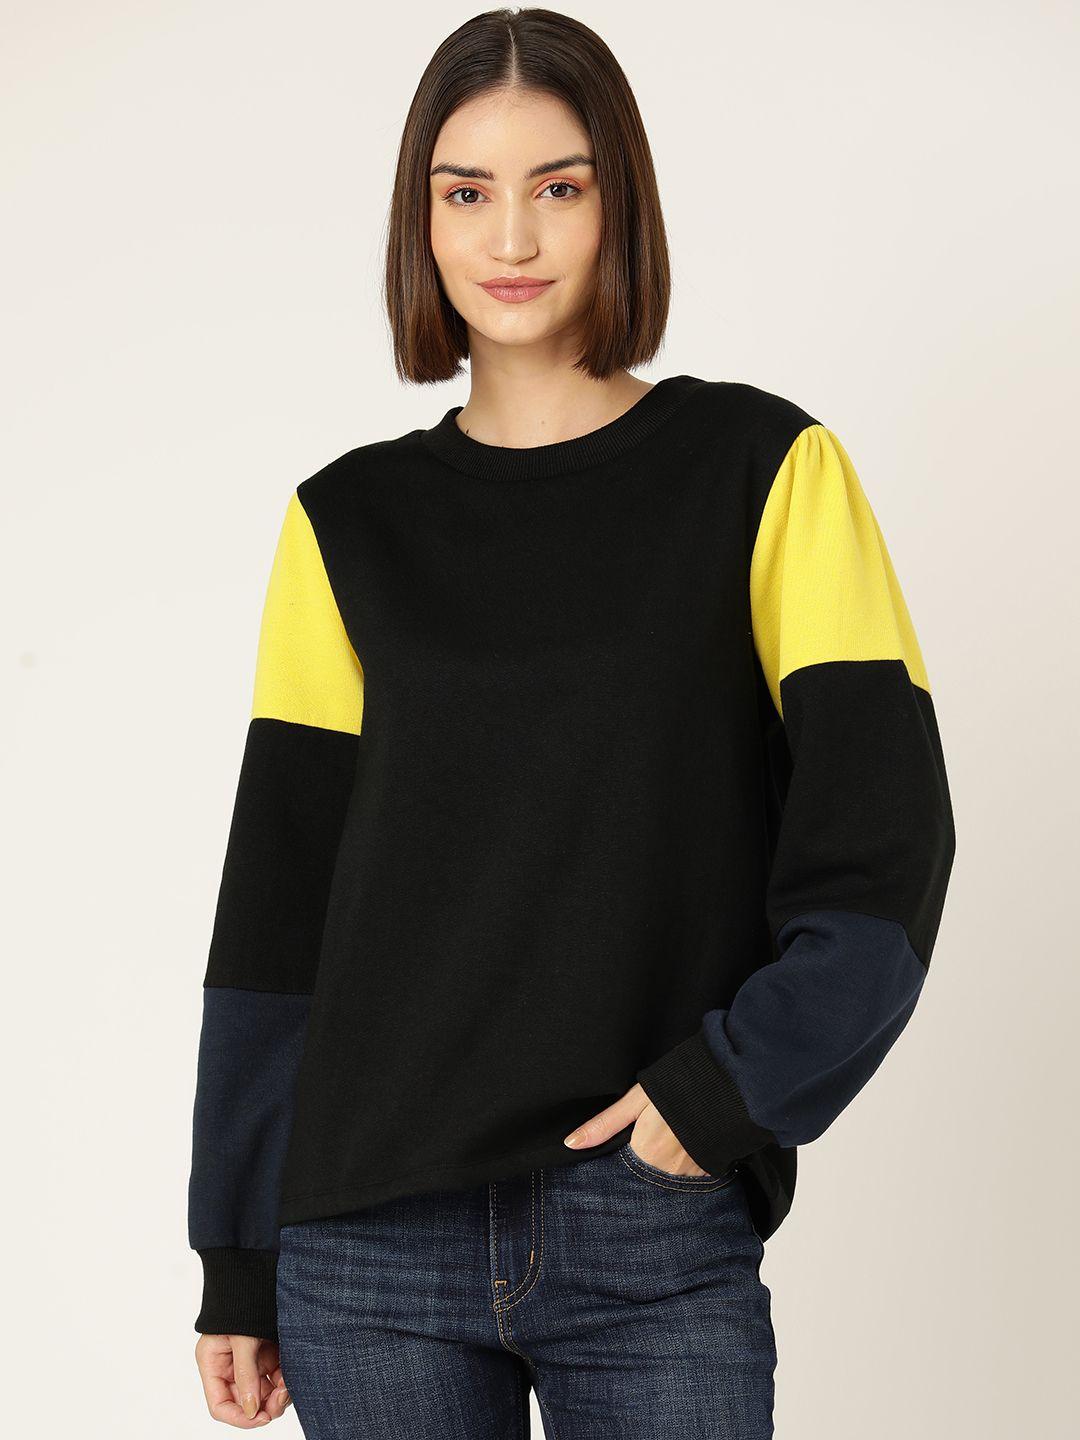 rue collection colourblocked fleece sweatshirt